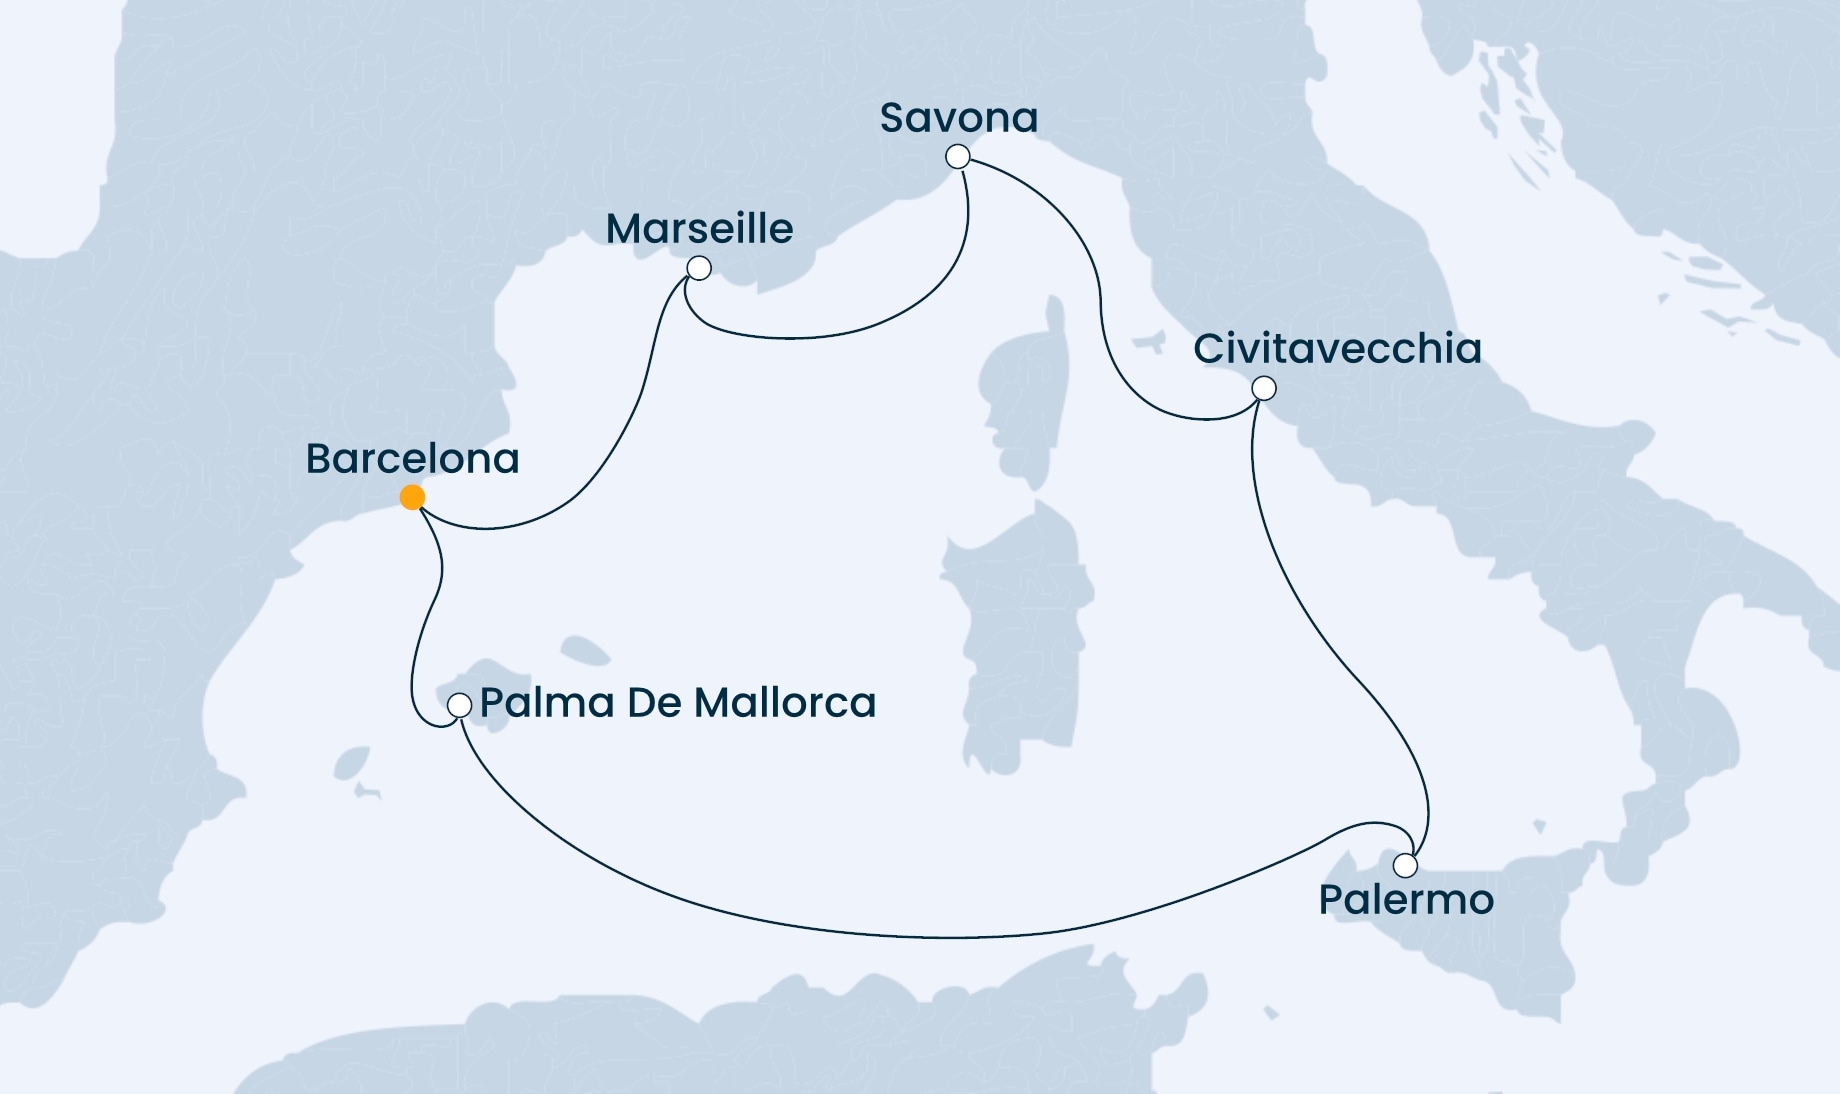 7 Night Mediterranean Cruise On Costa Smeralda Departing From Barcelona itinerary map